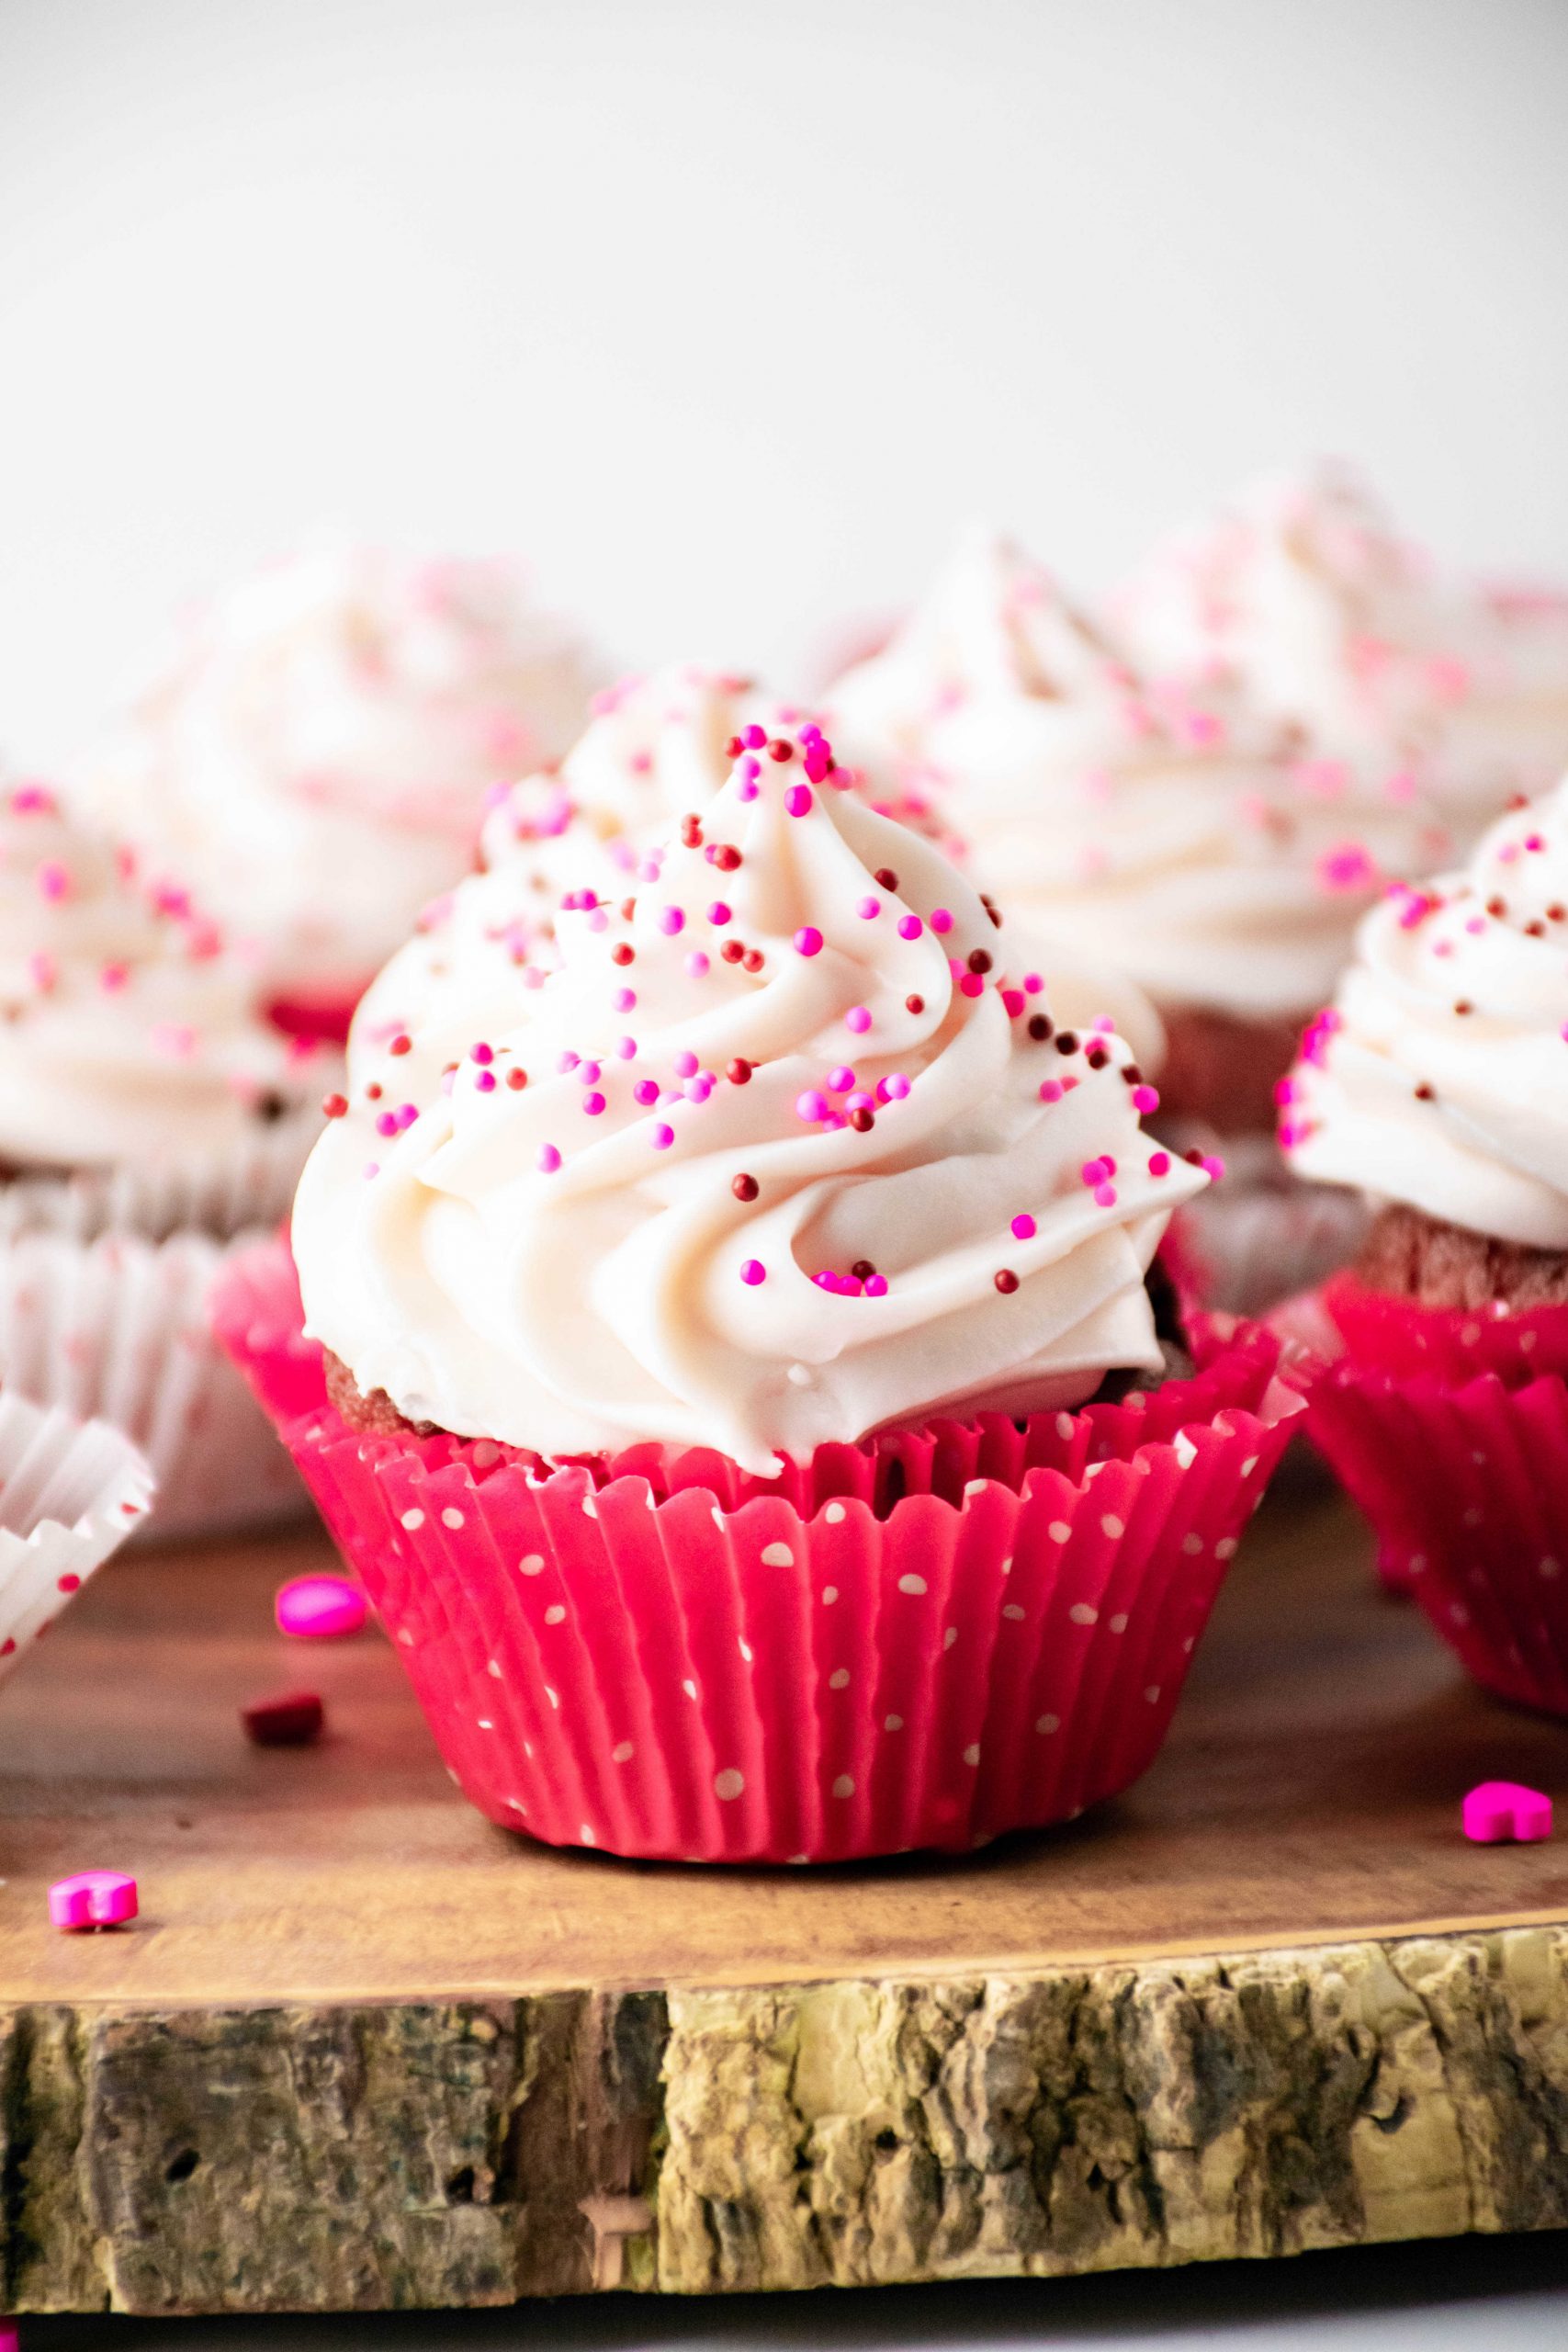 Chocolate Truffle Red Velvet Cupcakes